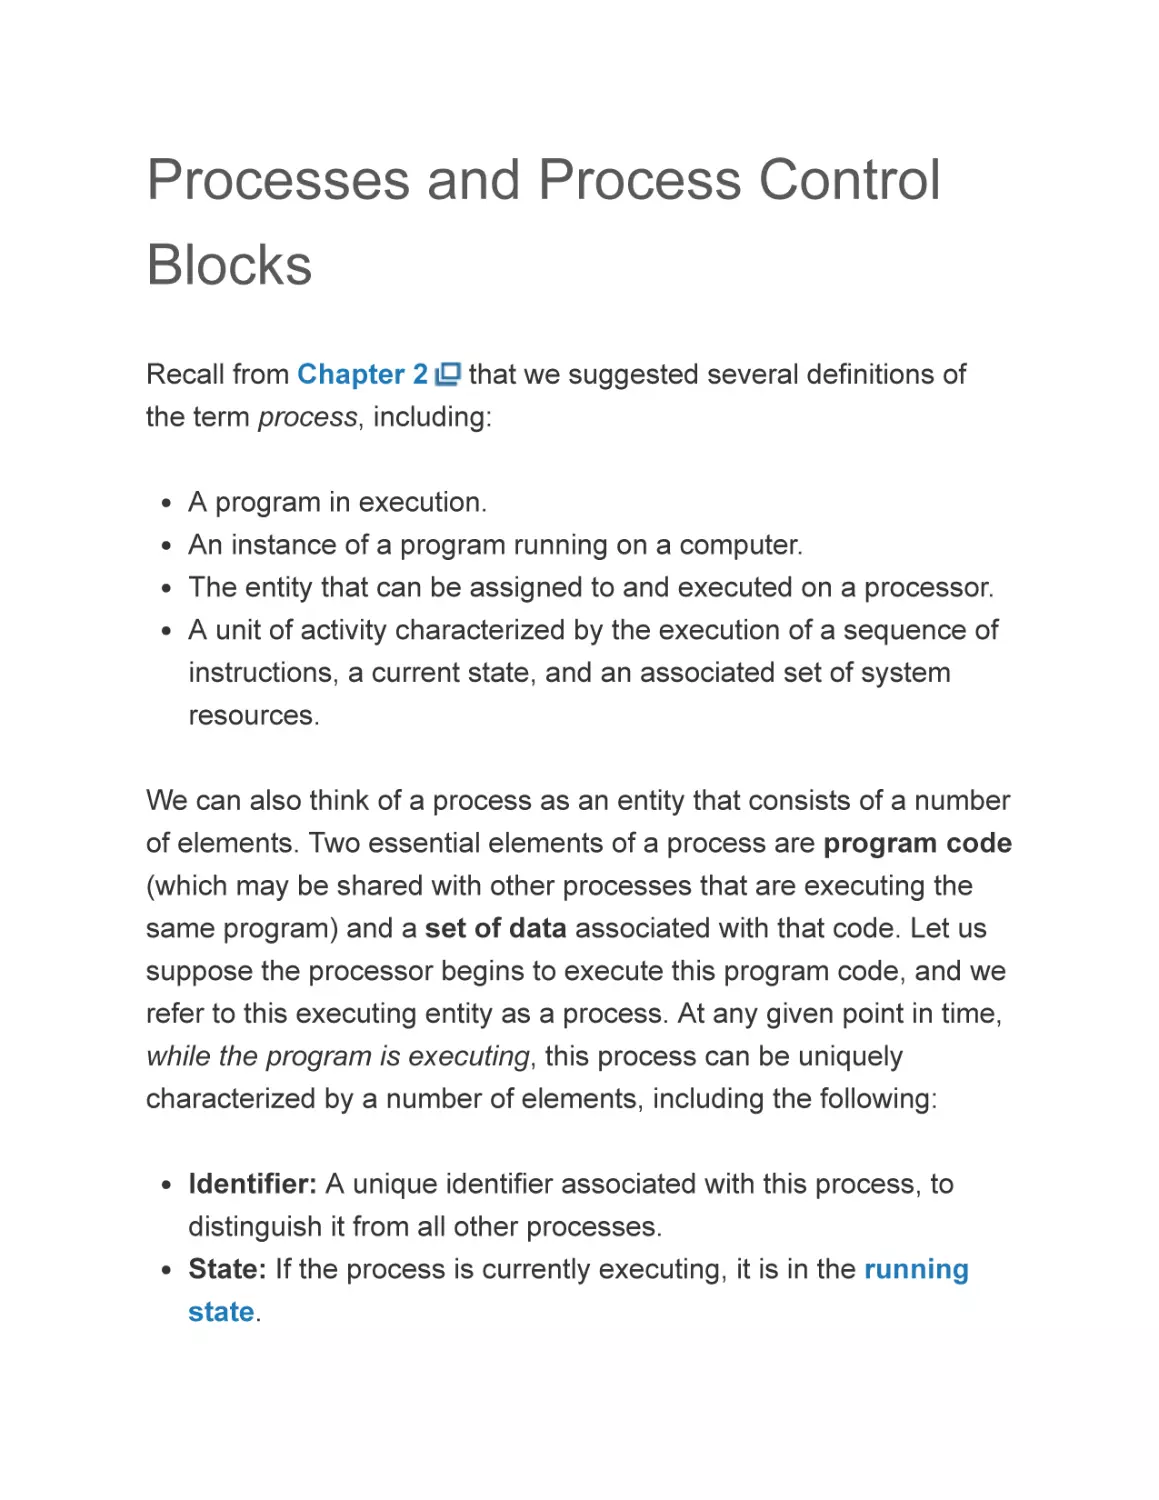 Processes and Process Control Blocks